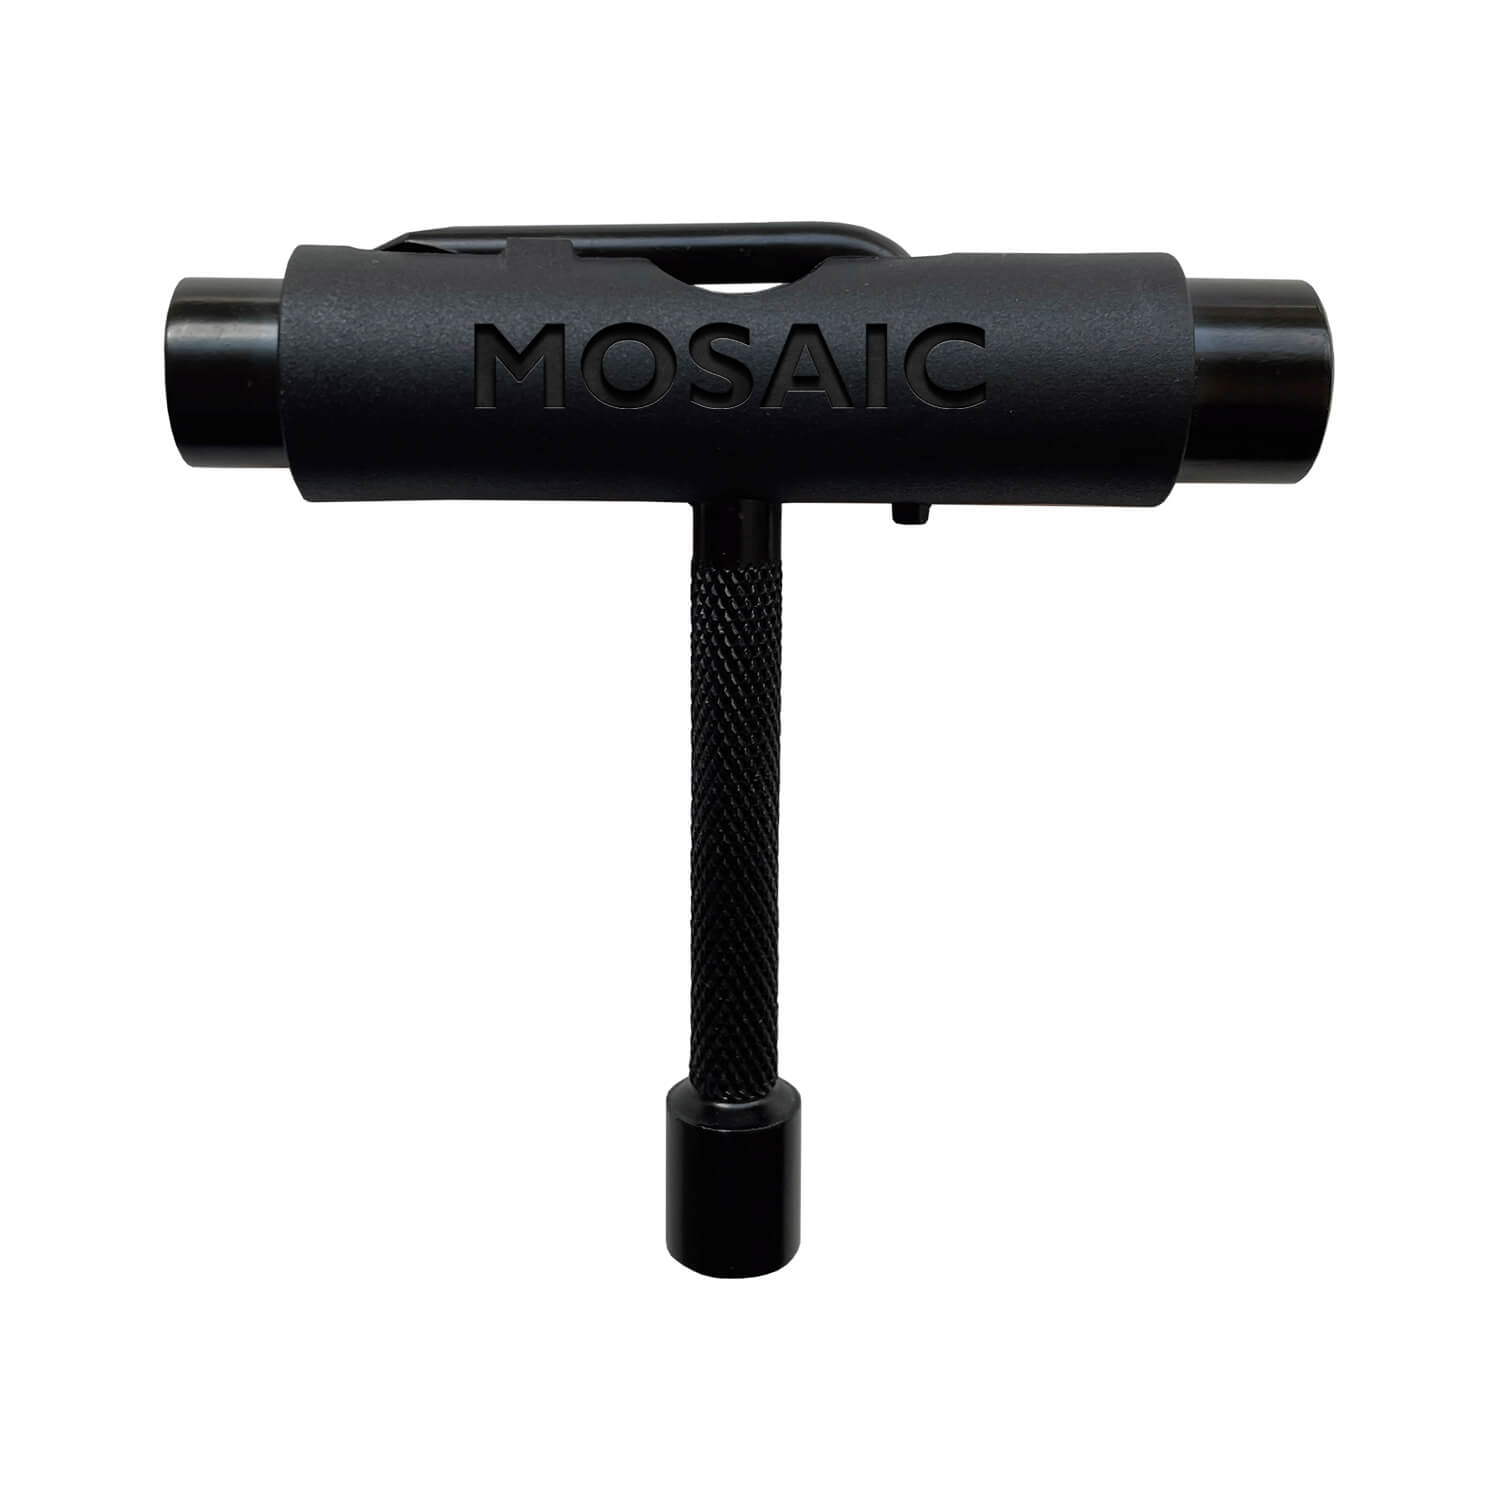 Mosaic T Tool 6 in 1 Black